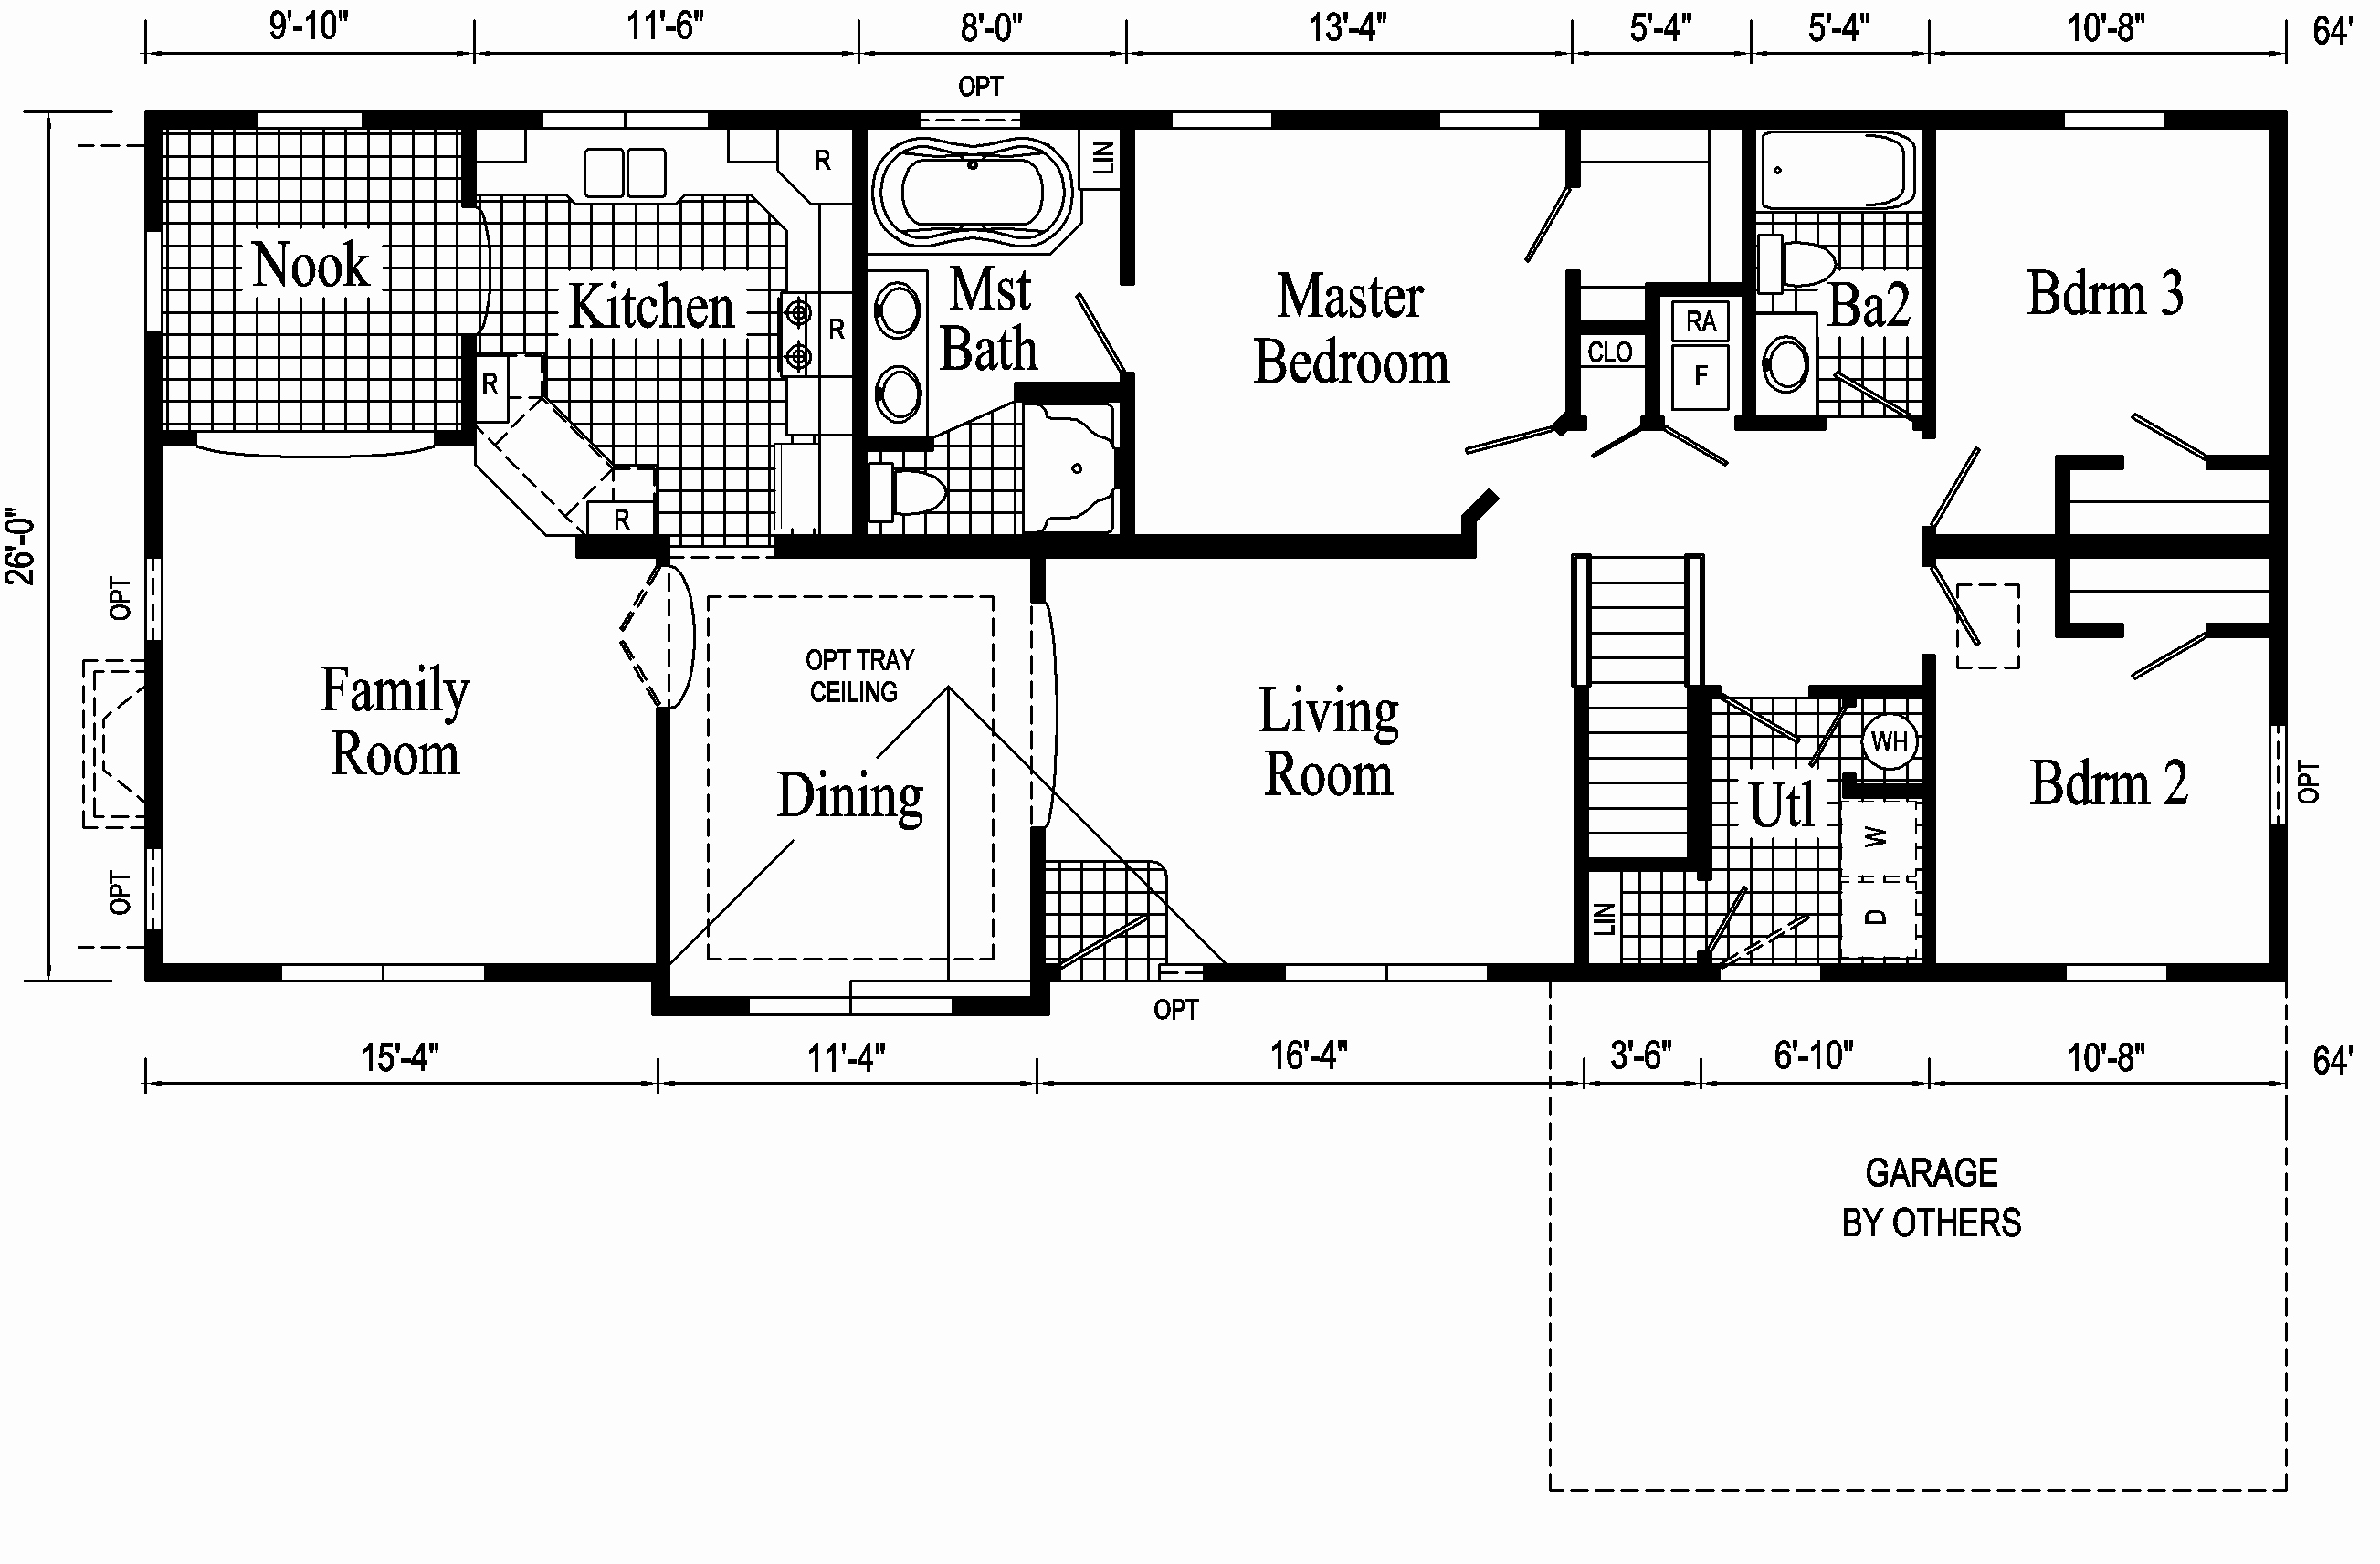 Home Floor Plans Prefab Homes Small Modular Large Ranch